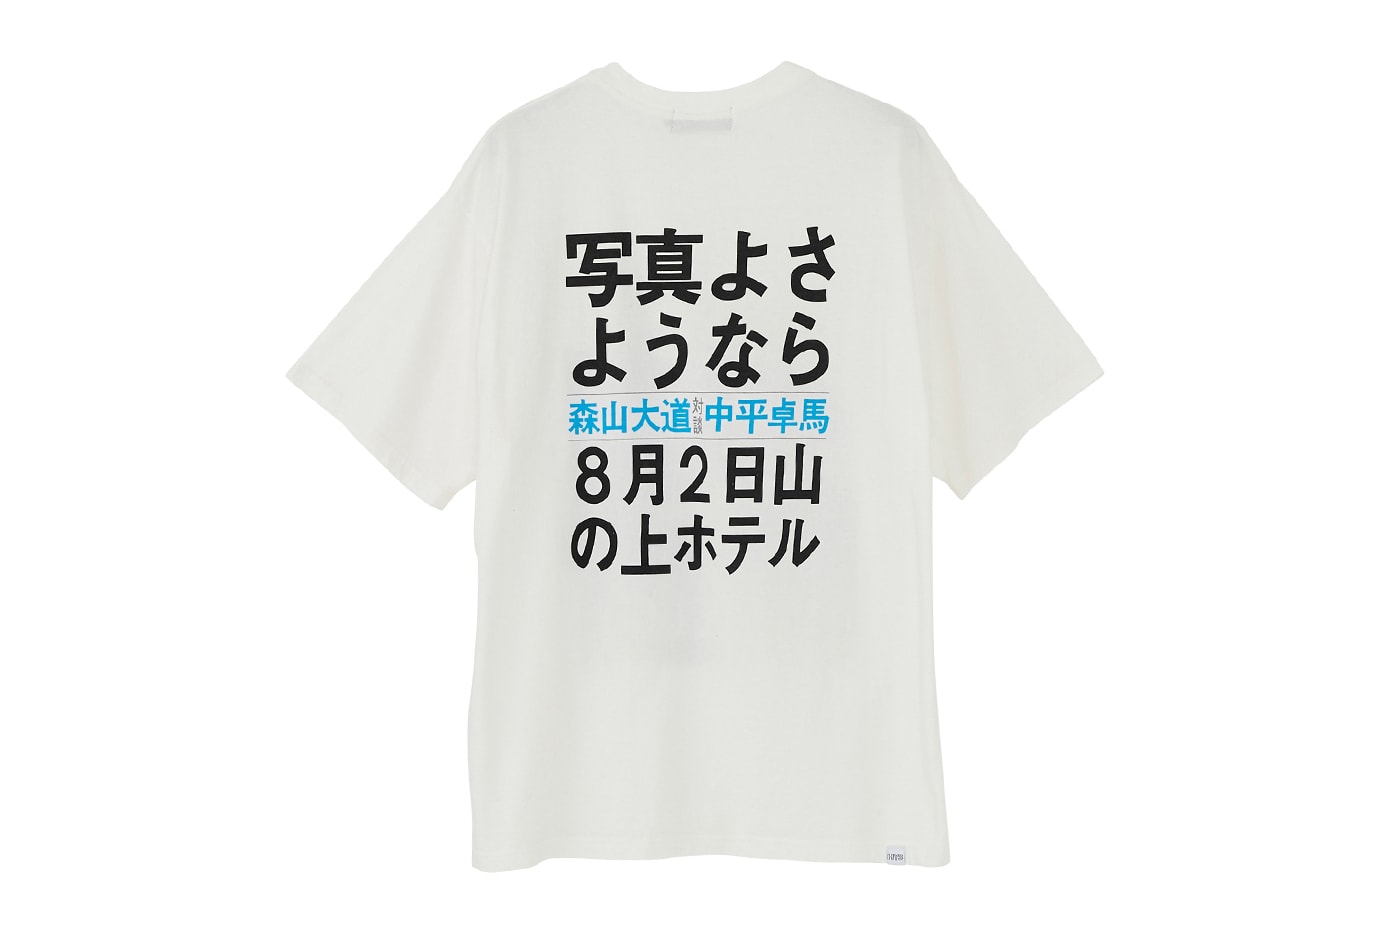 HYSTERIC GLAMOUR 为森山大道 & 中平卓马最新展览打造纪念 T-Shirt